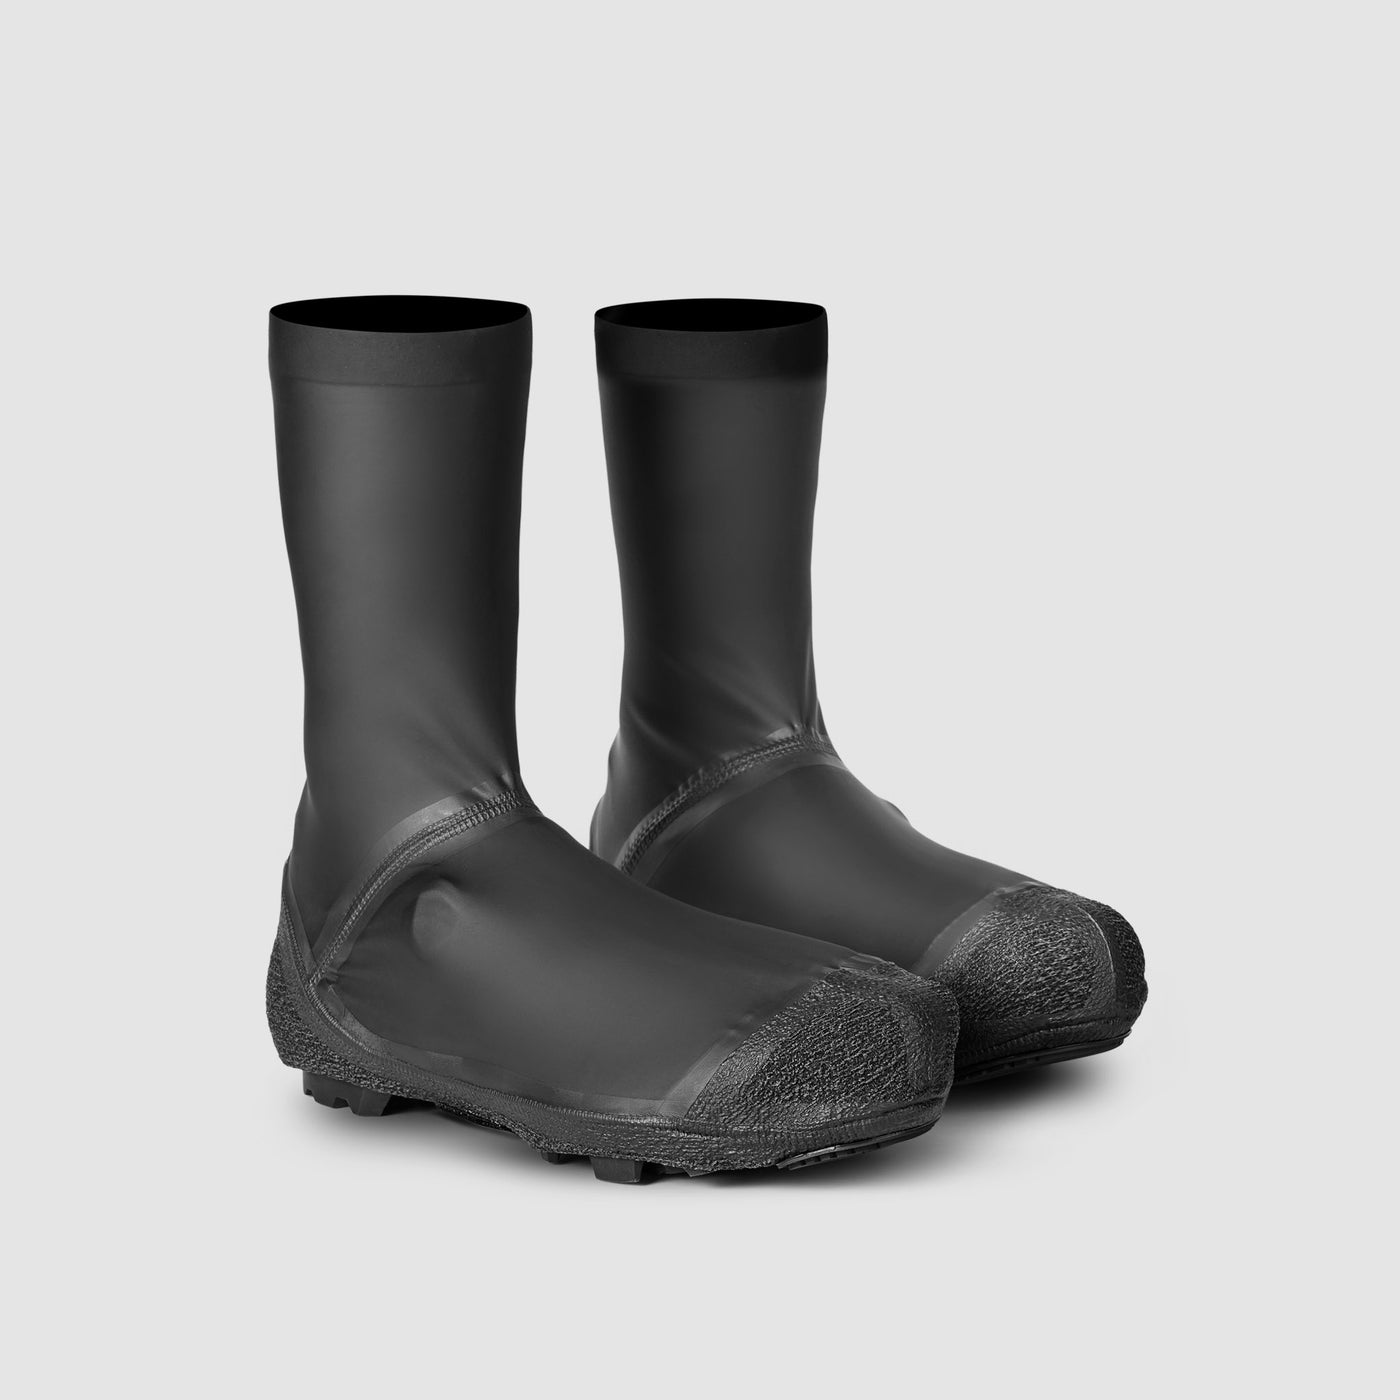 AquaShield 2 Waterproof Gravel Shoe Covers